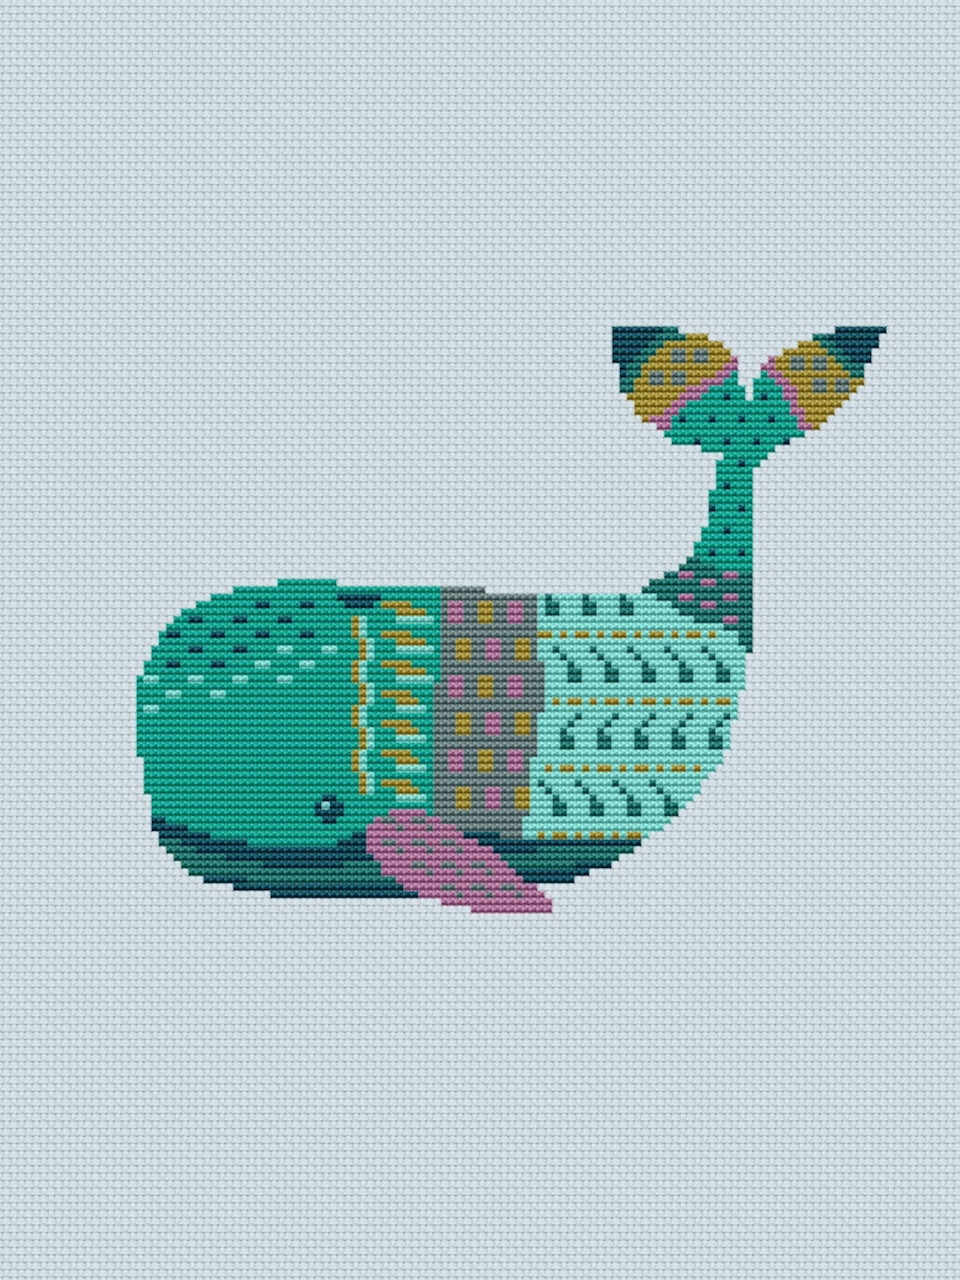 Magic Whale - cross stitch pattern